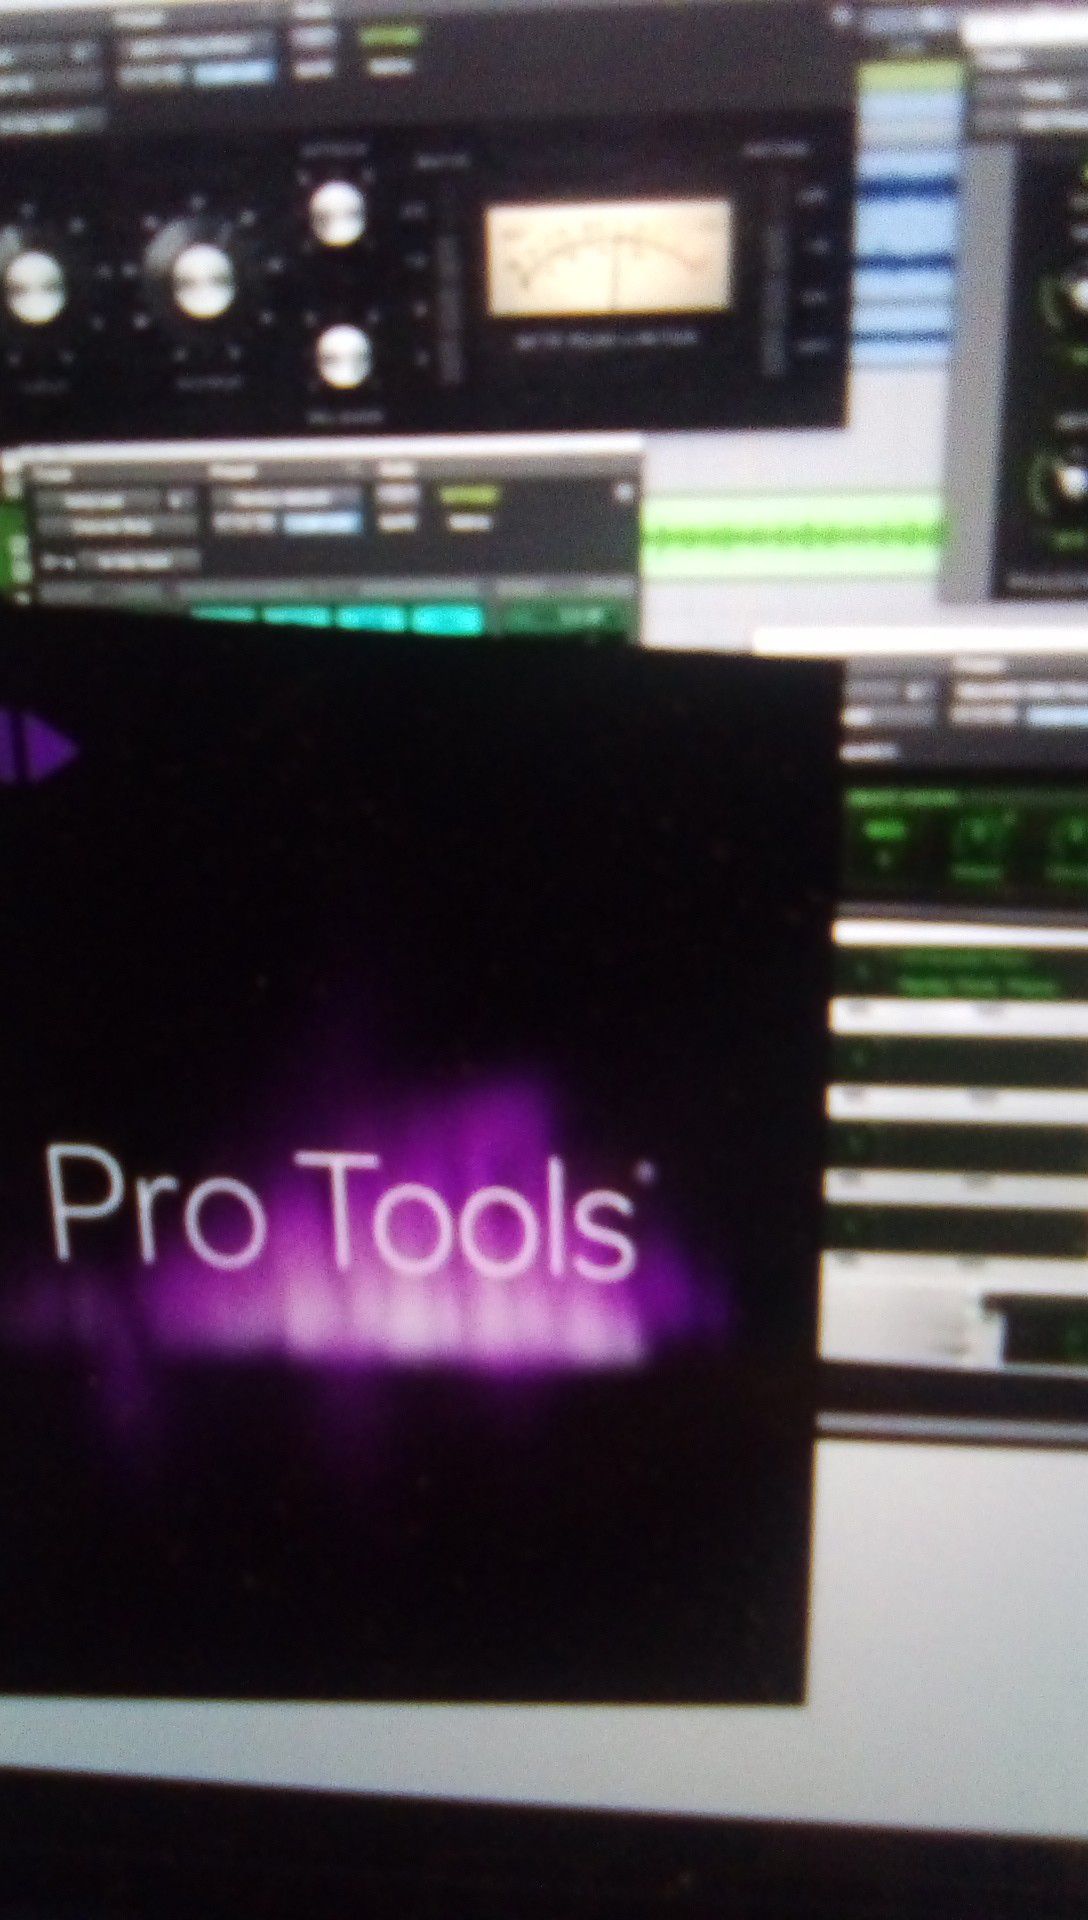 Pro tools 10 full version no ilok needed